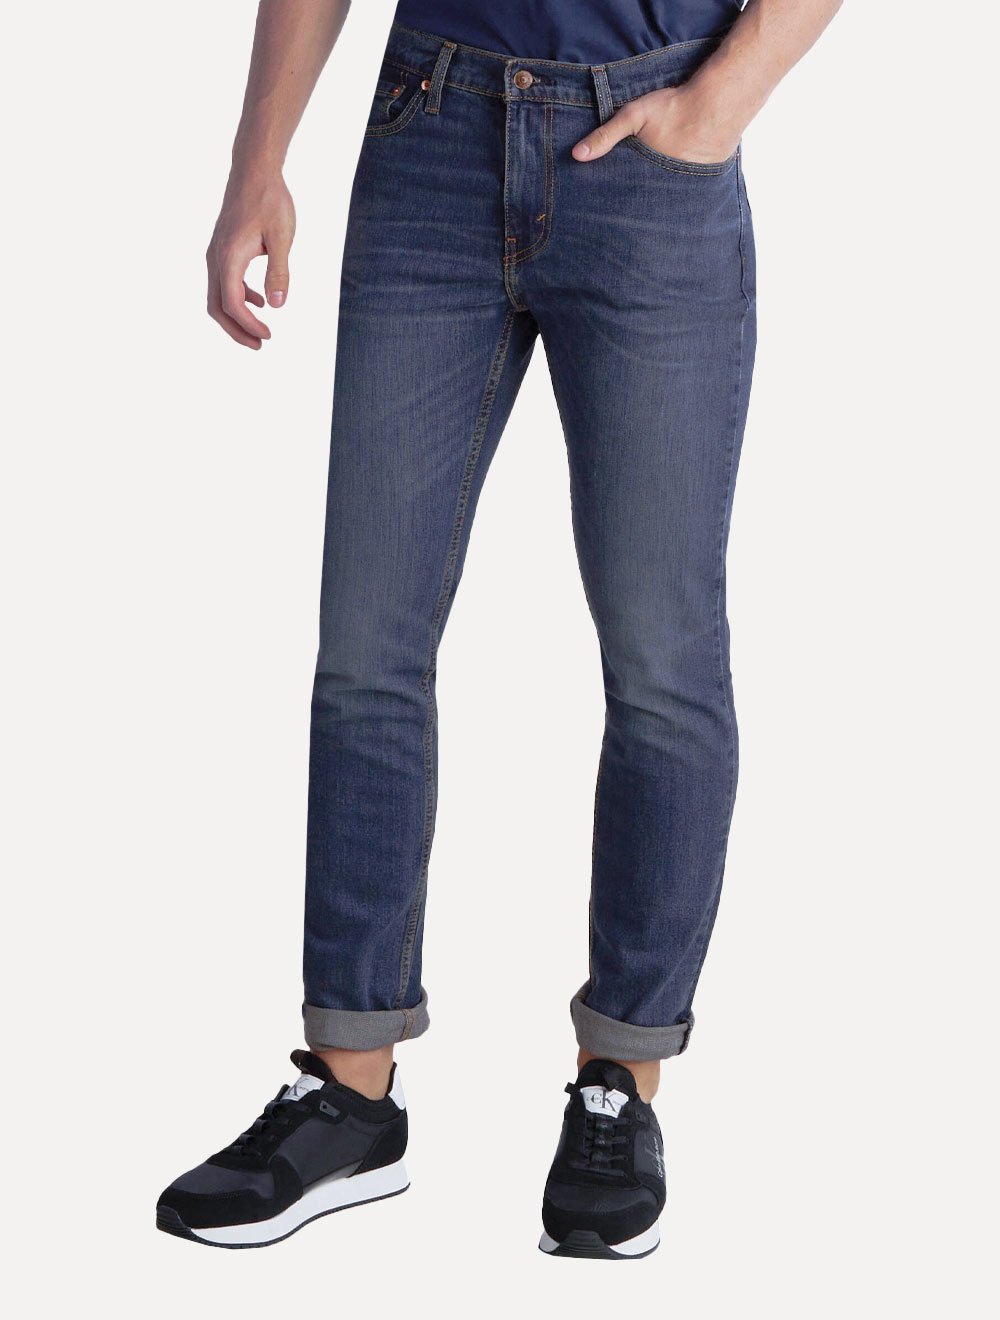 Calça Levis Jeans Masculina 510 Skinny Azul Escuro